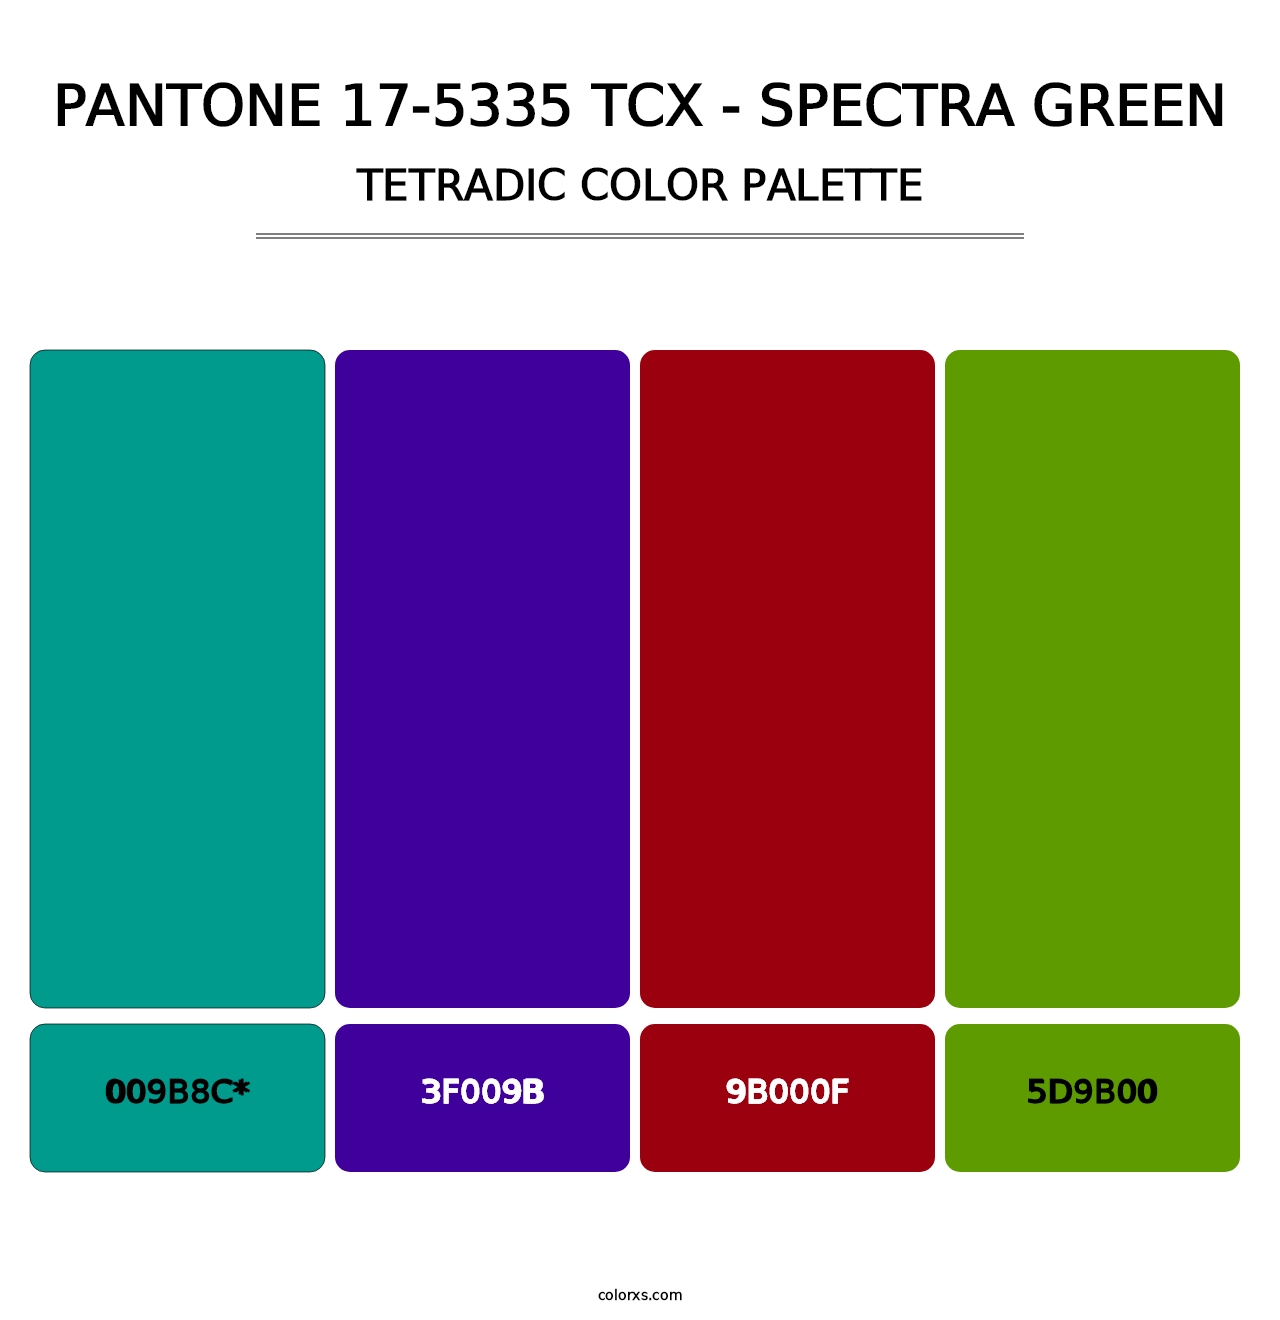 PANTONE 17-5335 TCX - Spectra Green - Tetradic Color Palette